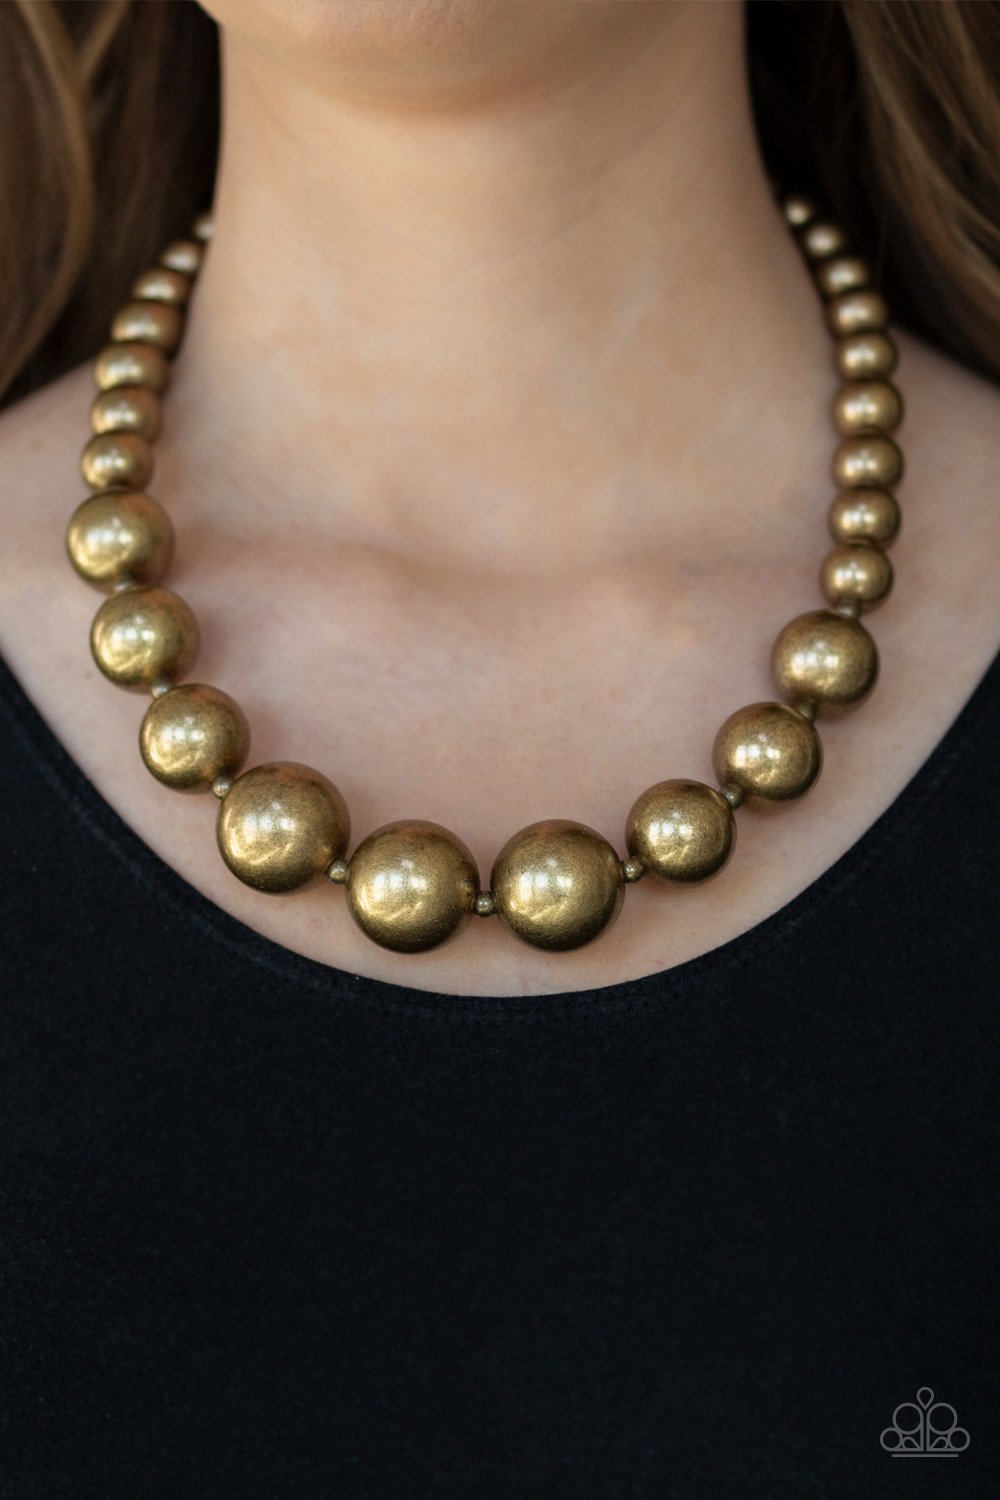 Living Up To Reputation - brass - Paparazzi necklace - $5 Jewelry with Ashley Swint